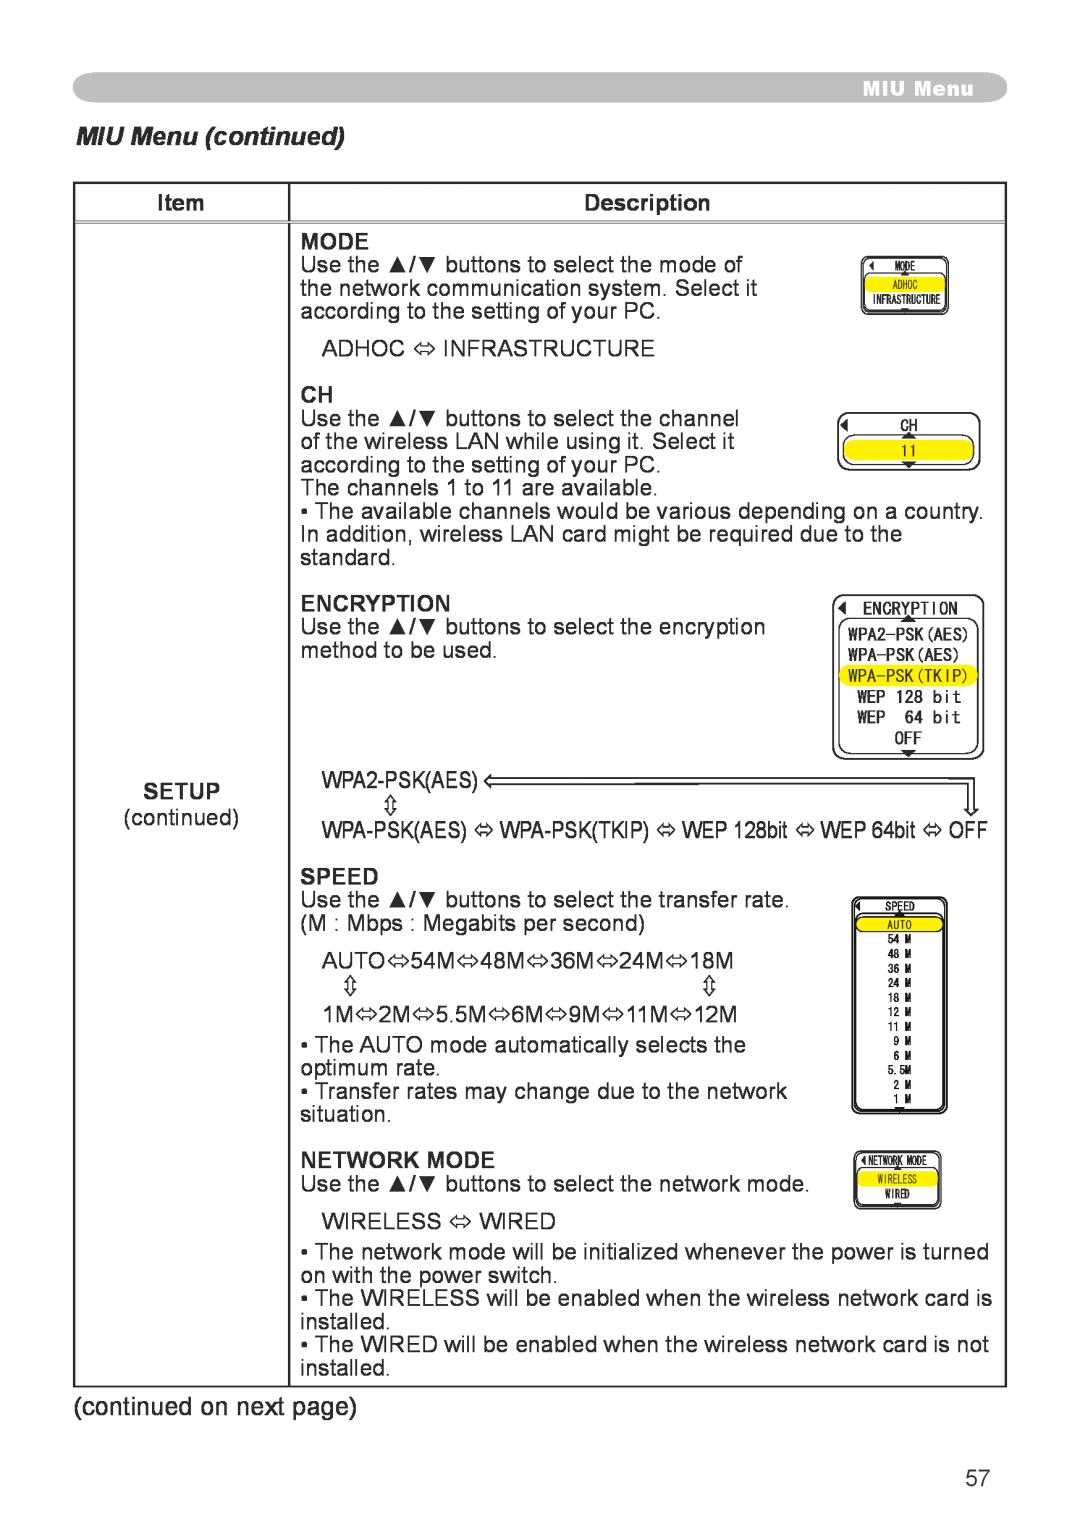 Hitachi CP-X608 user manual MIU Menu continued, Description, Encryption, Setup, Speed, Network Mode 